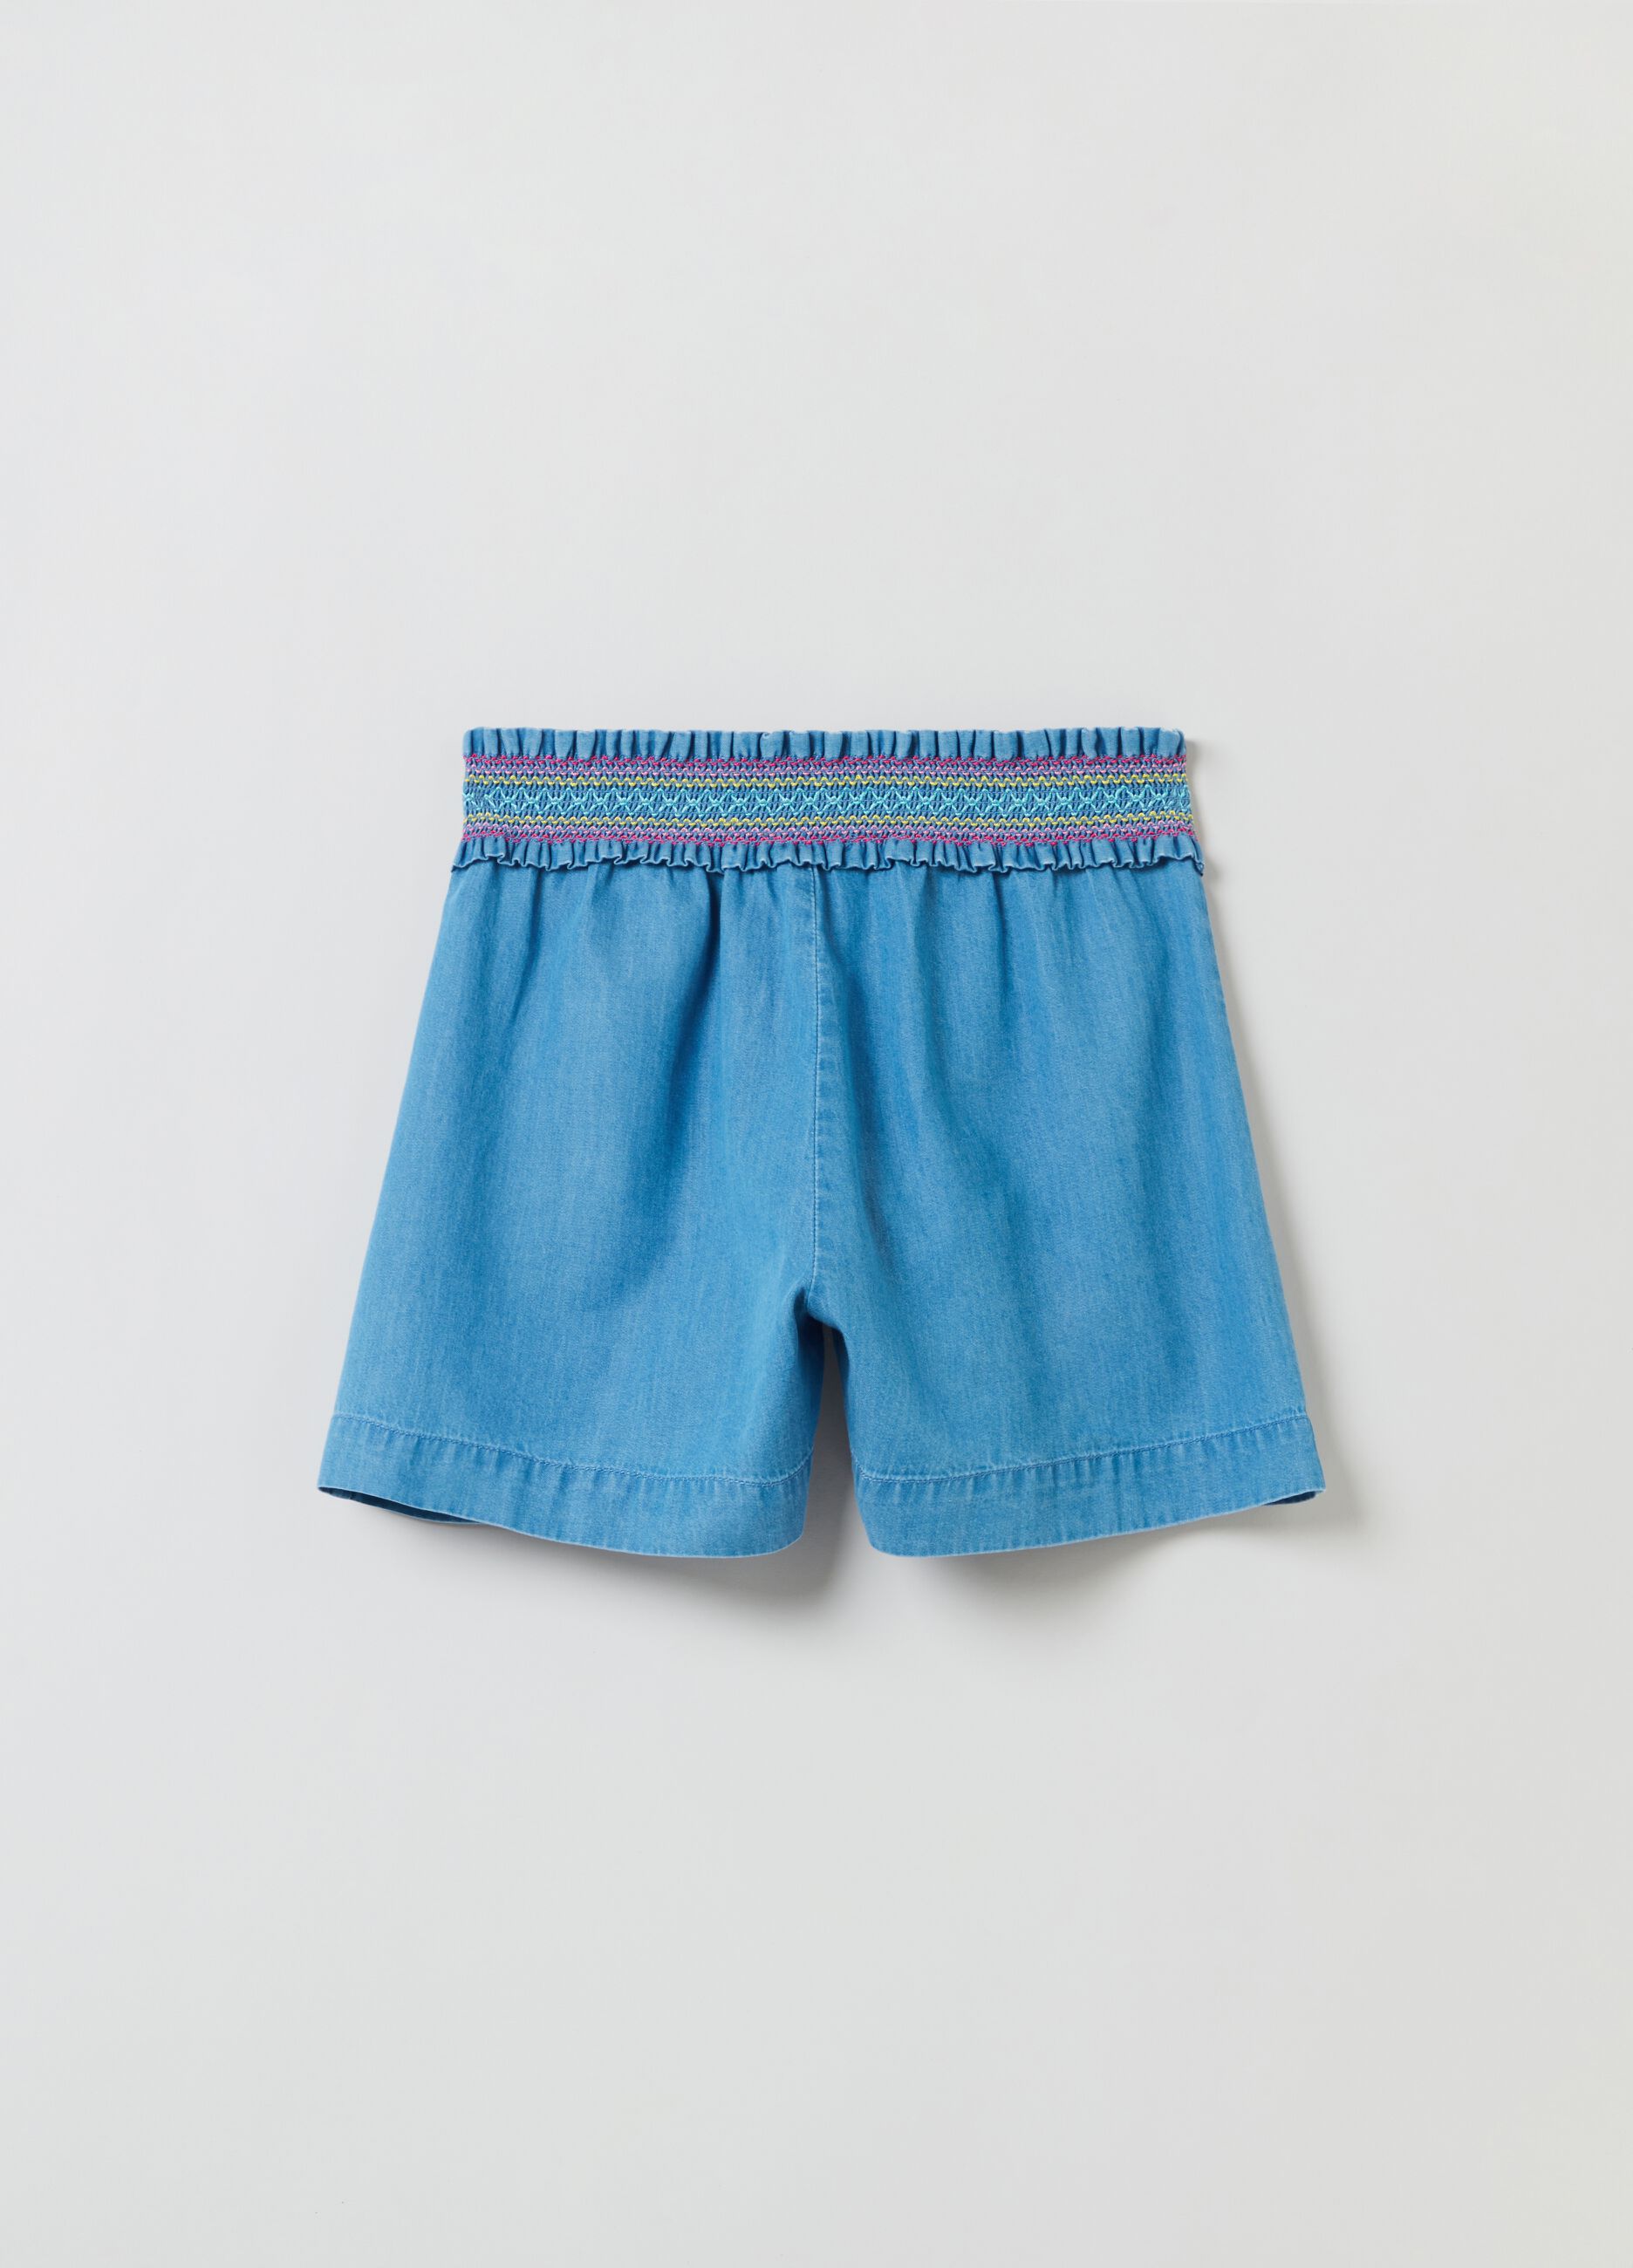 Denim-effect shorts with smock stitch